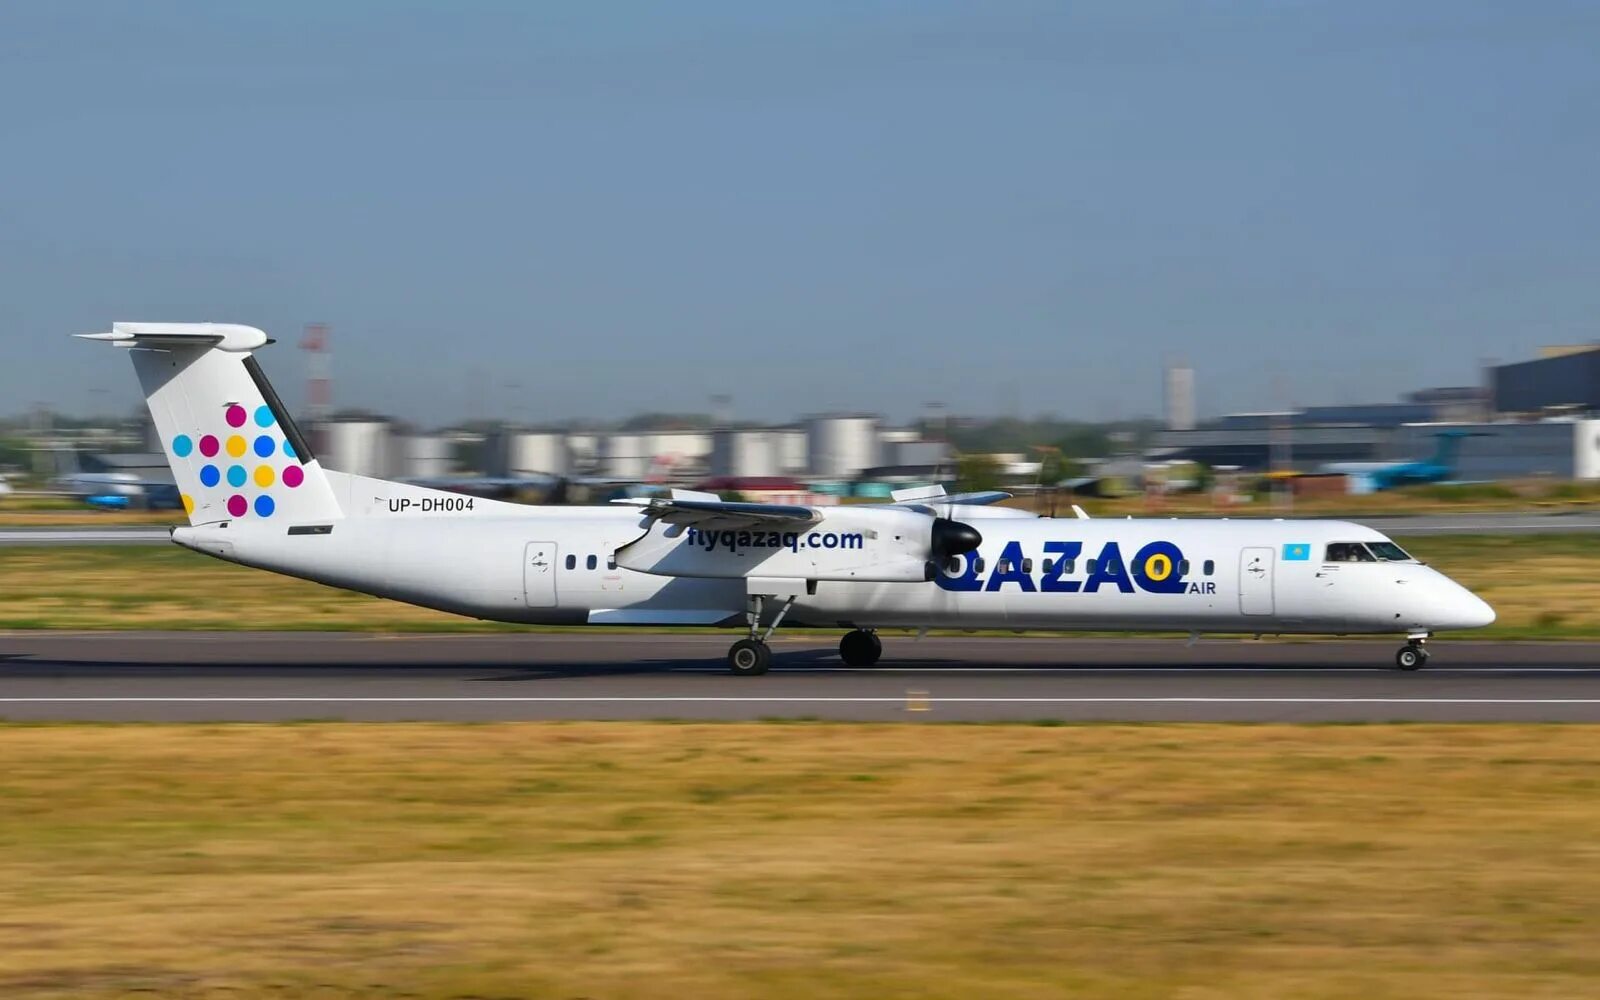 Усть каменогорск астана самолет. Авиакомпания Qazaq Air. Up-dh004 Bombardier Dash 8-400. Qazaq Air Новосибирск. Казак Эйр самолеты.